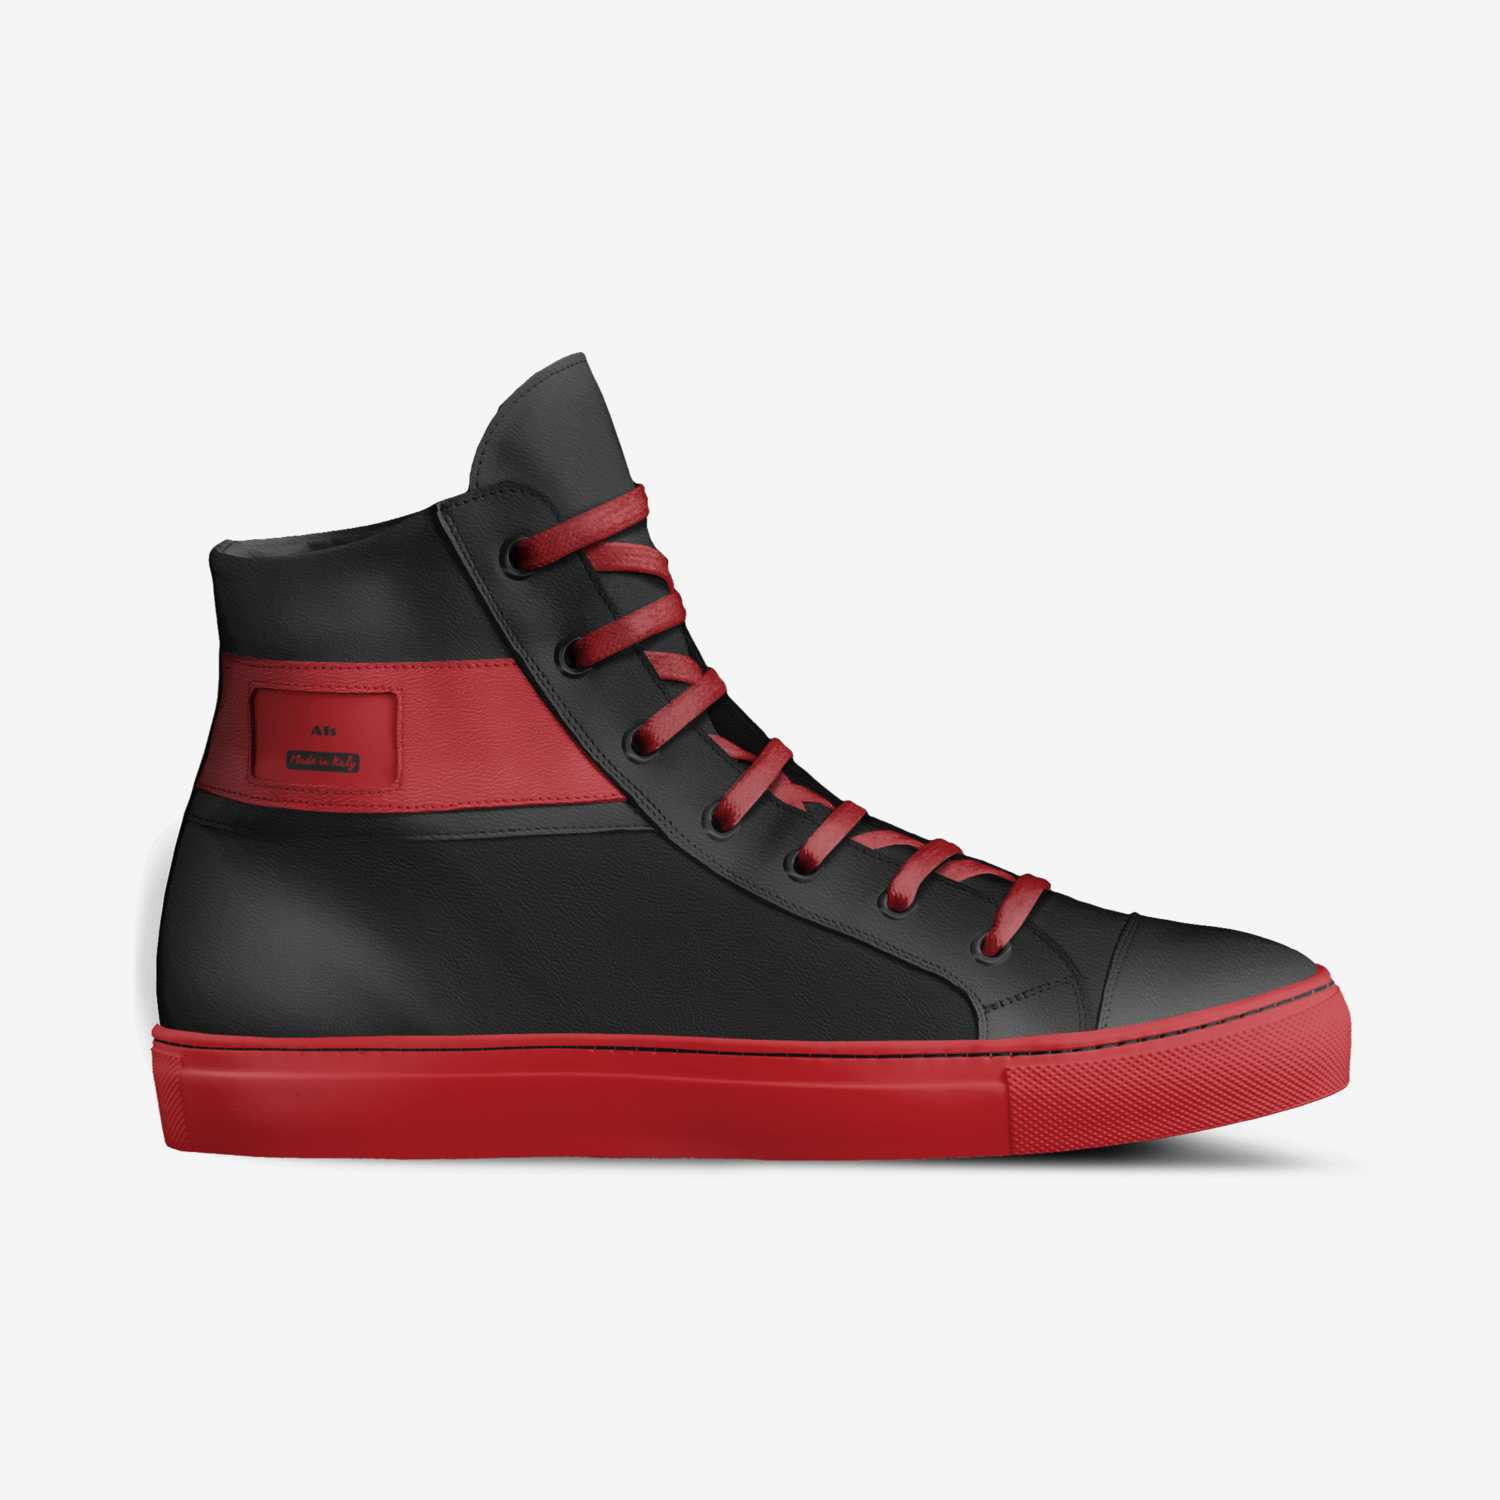 A1s | A Custom Shoe concept by Sosa